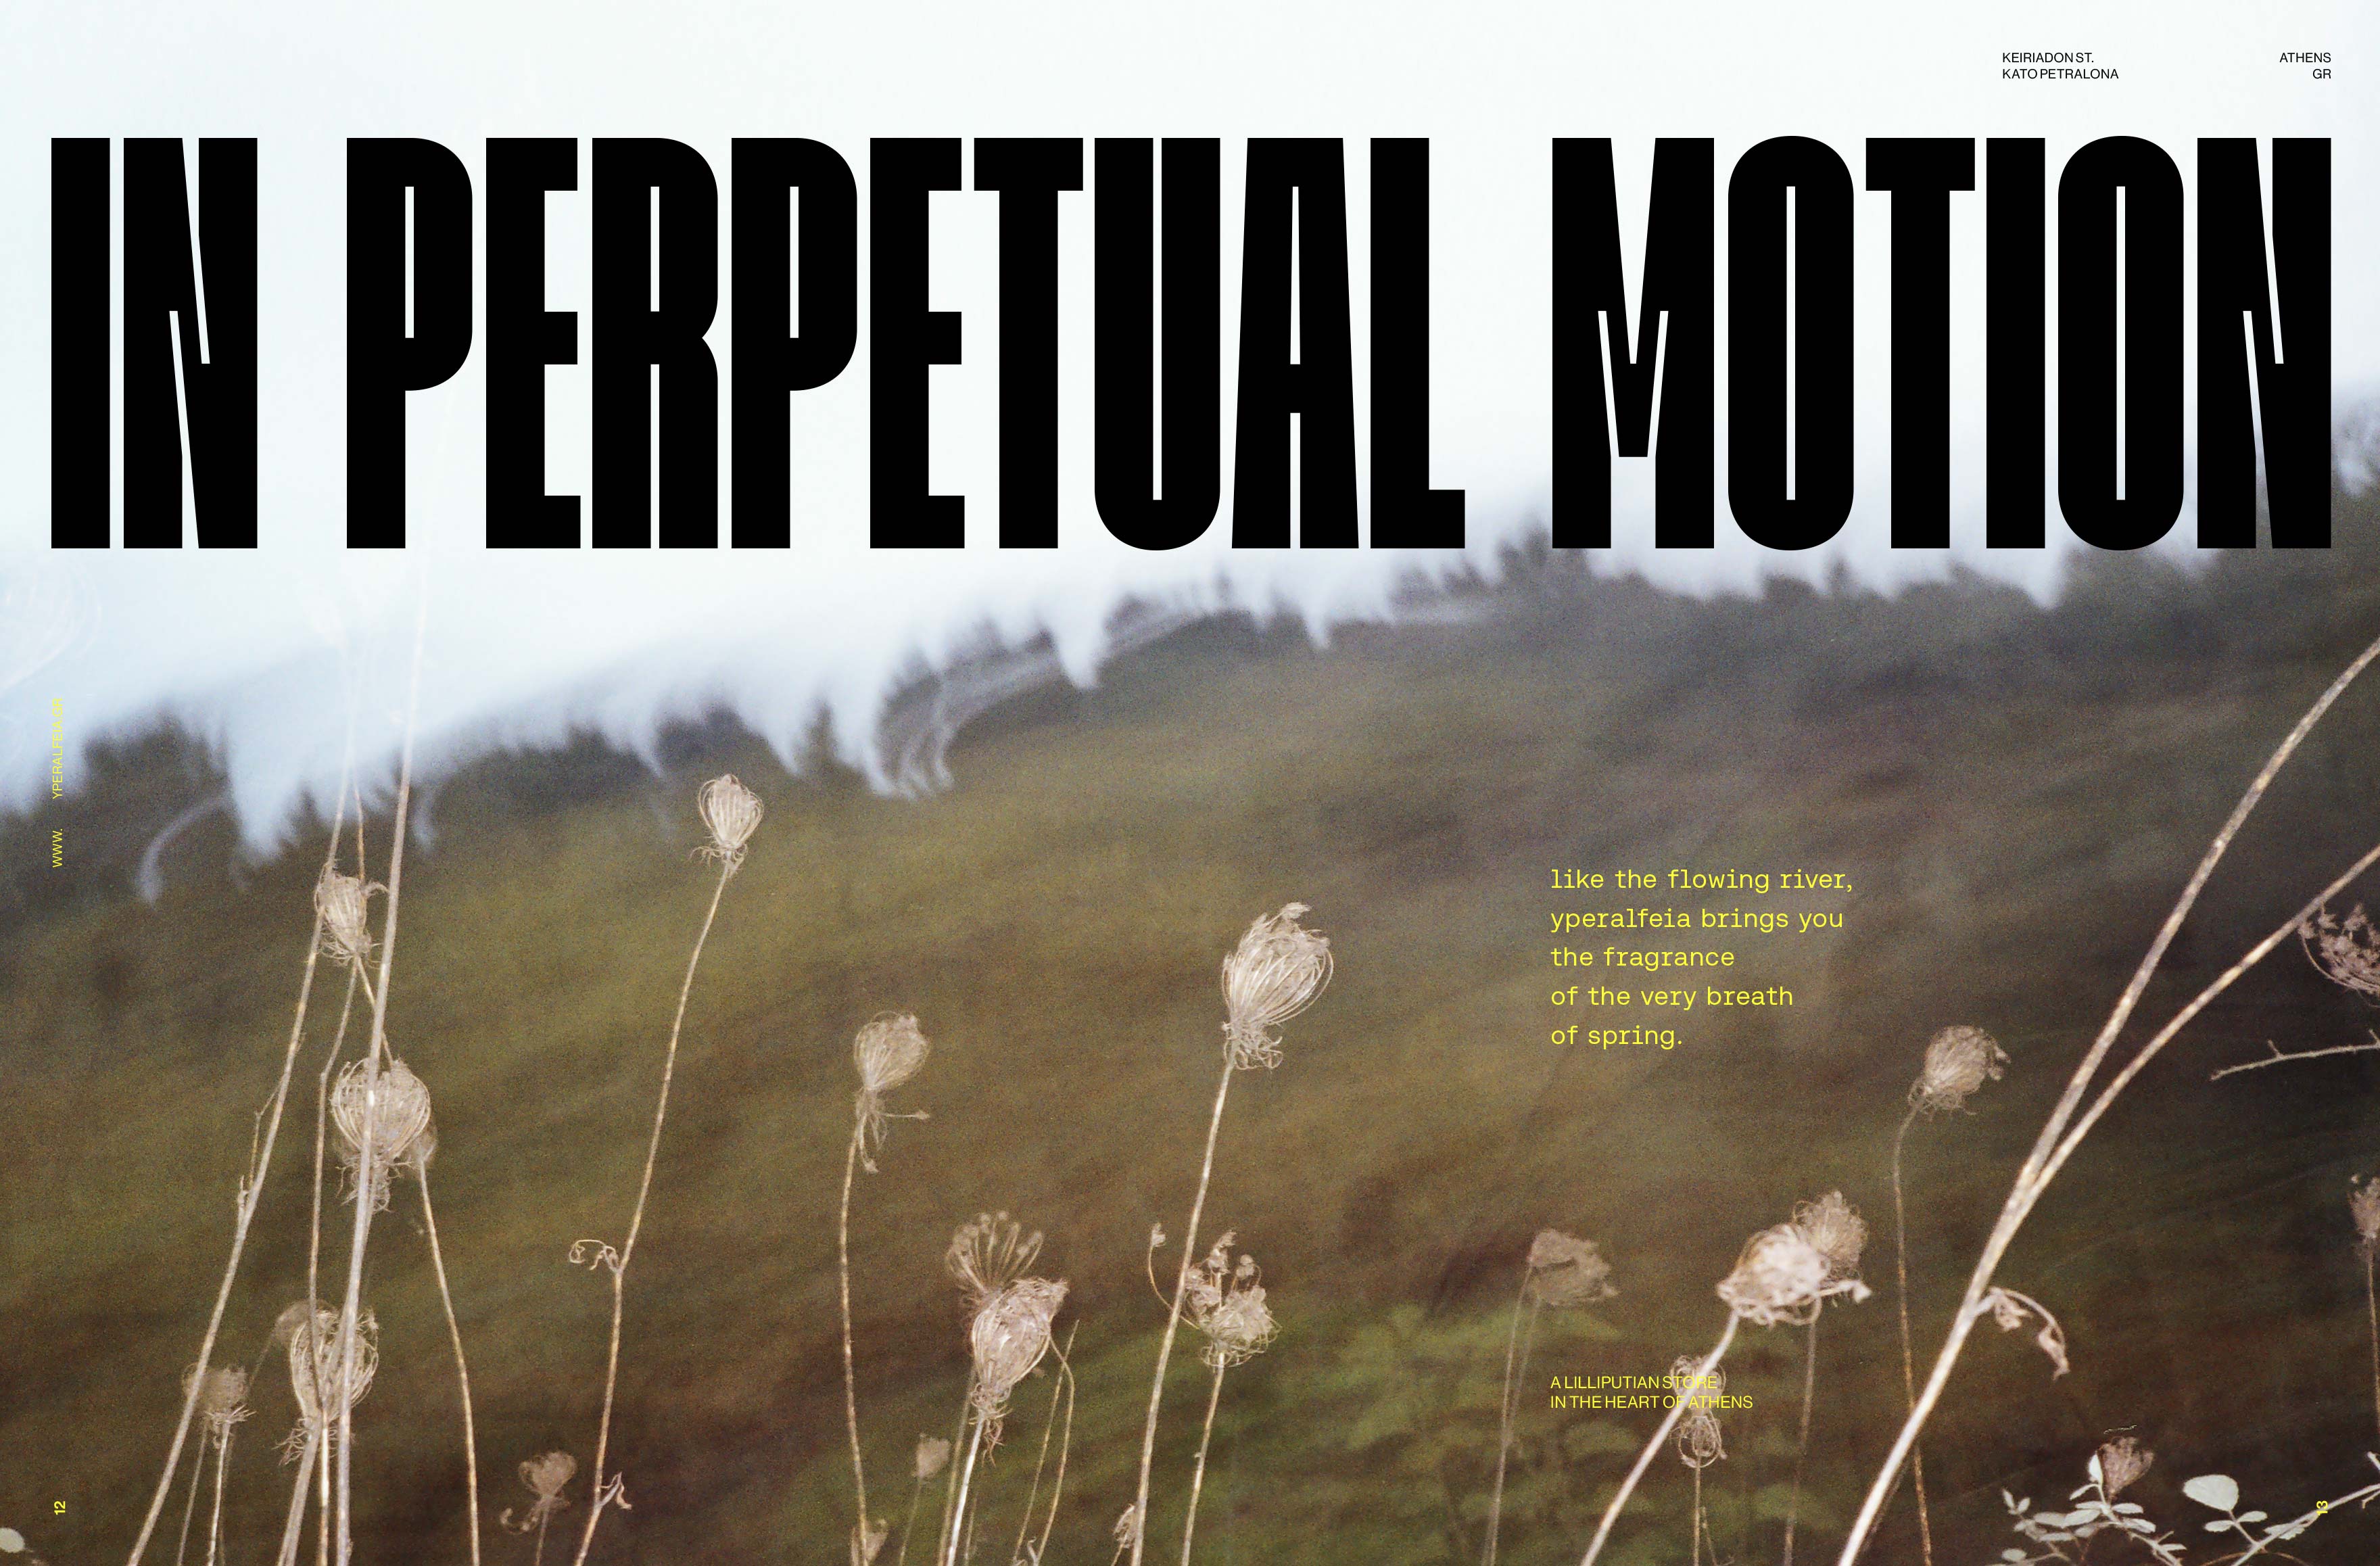 yperalfeia branding in perpetual motion kommigraphics